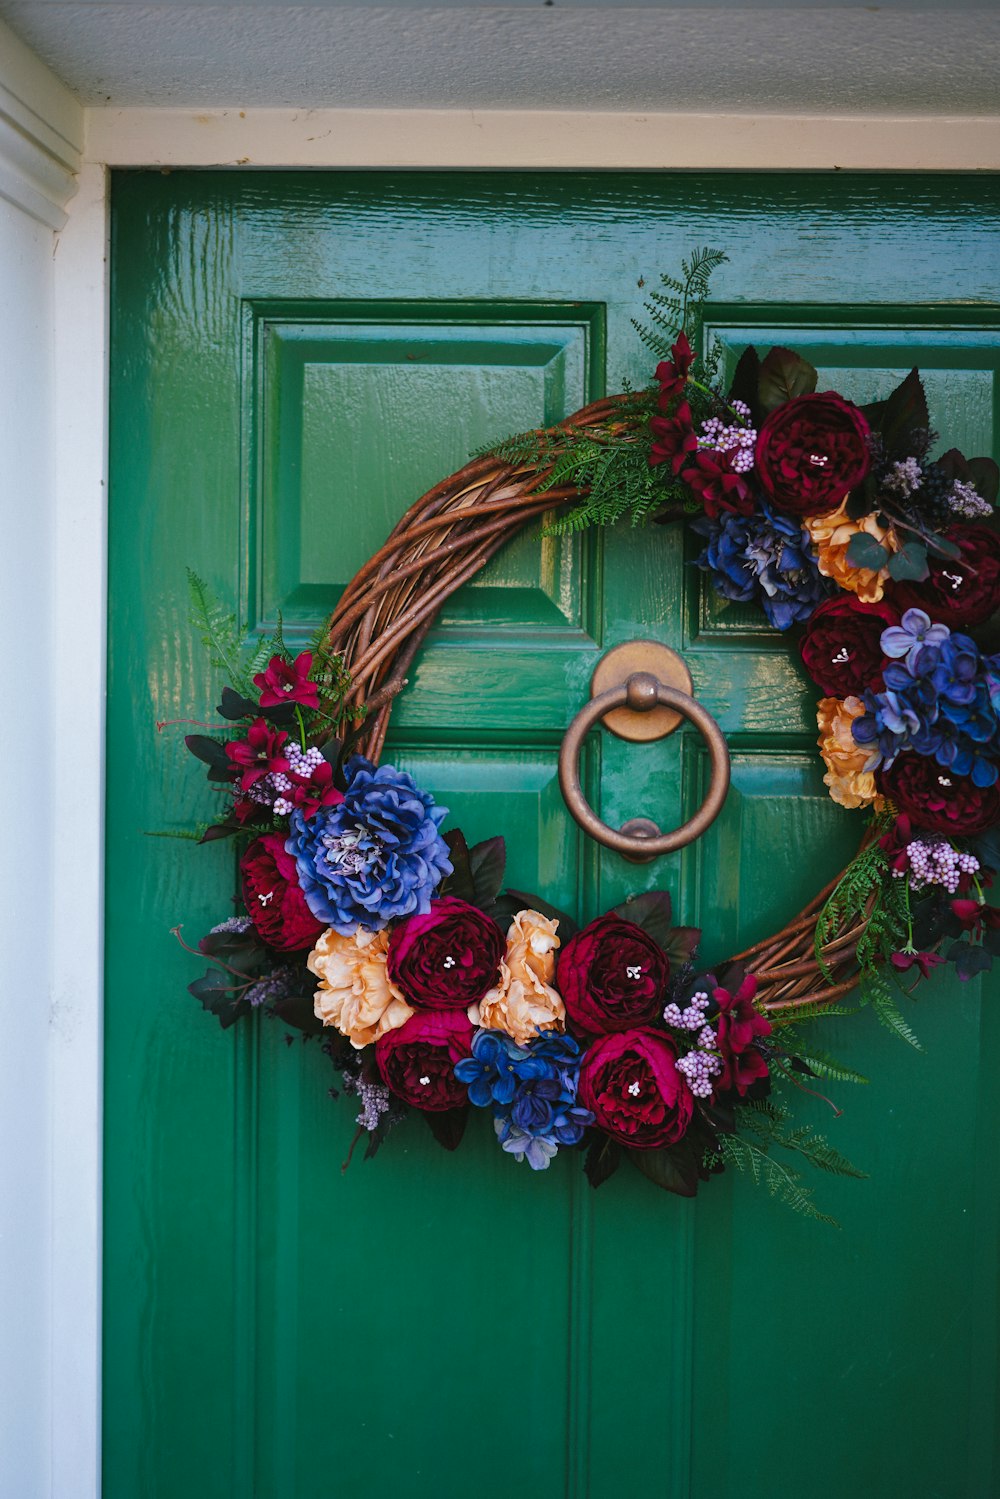 brown and red wreath on green wooden door